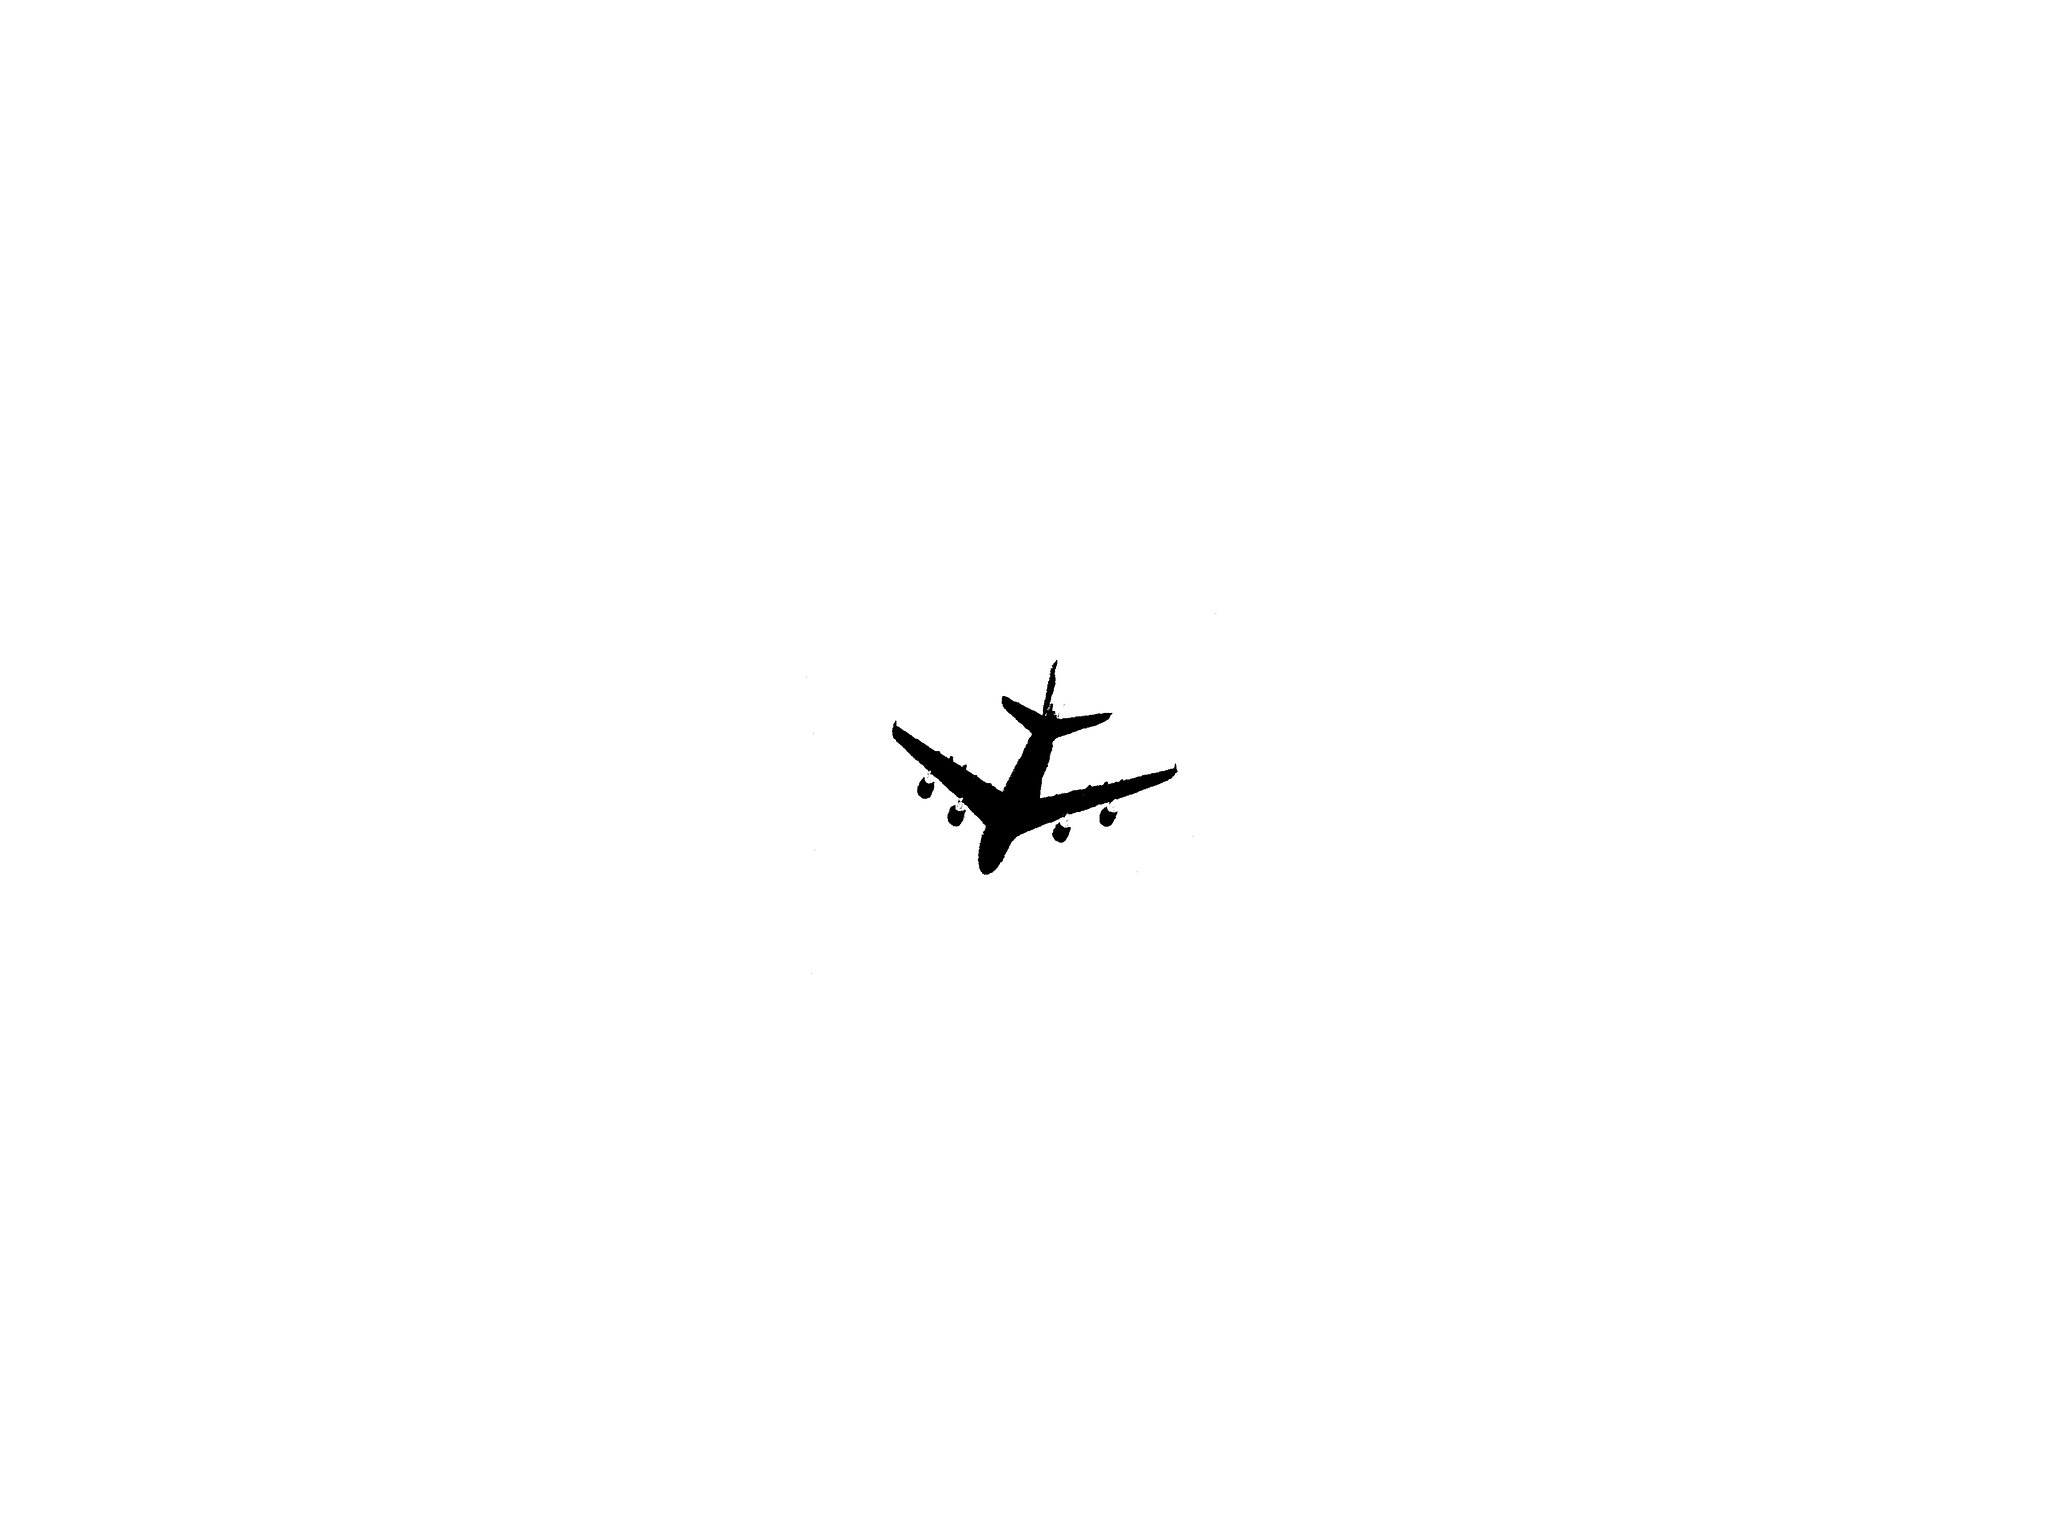 Avion / Plane